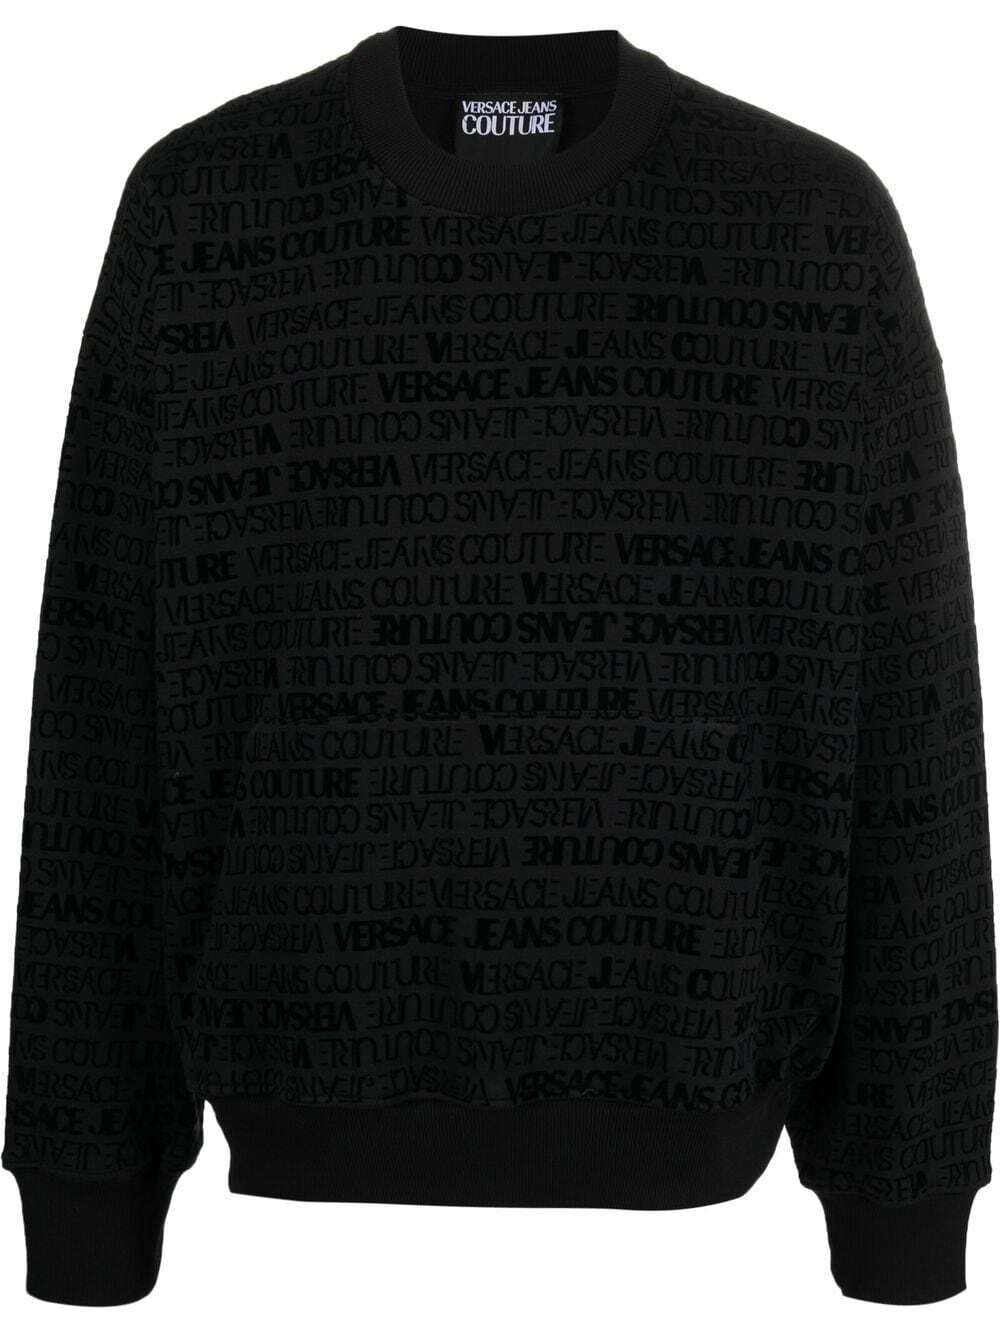 VERSACE JEANS COUTURE - Cotton Sweatshirt Versace